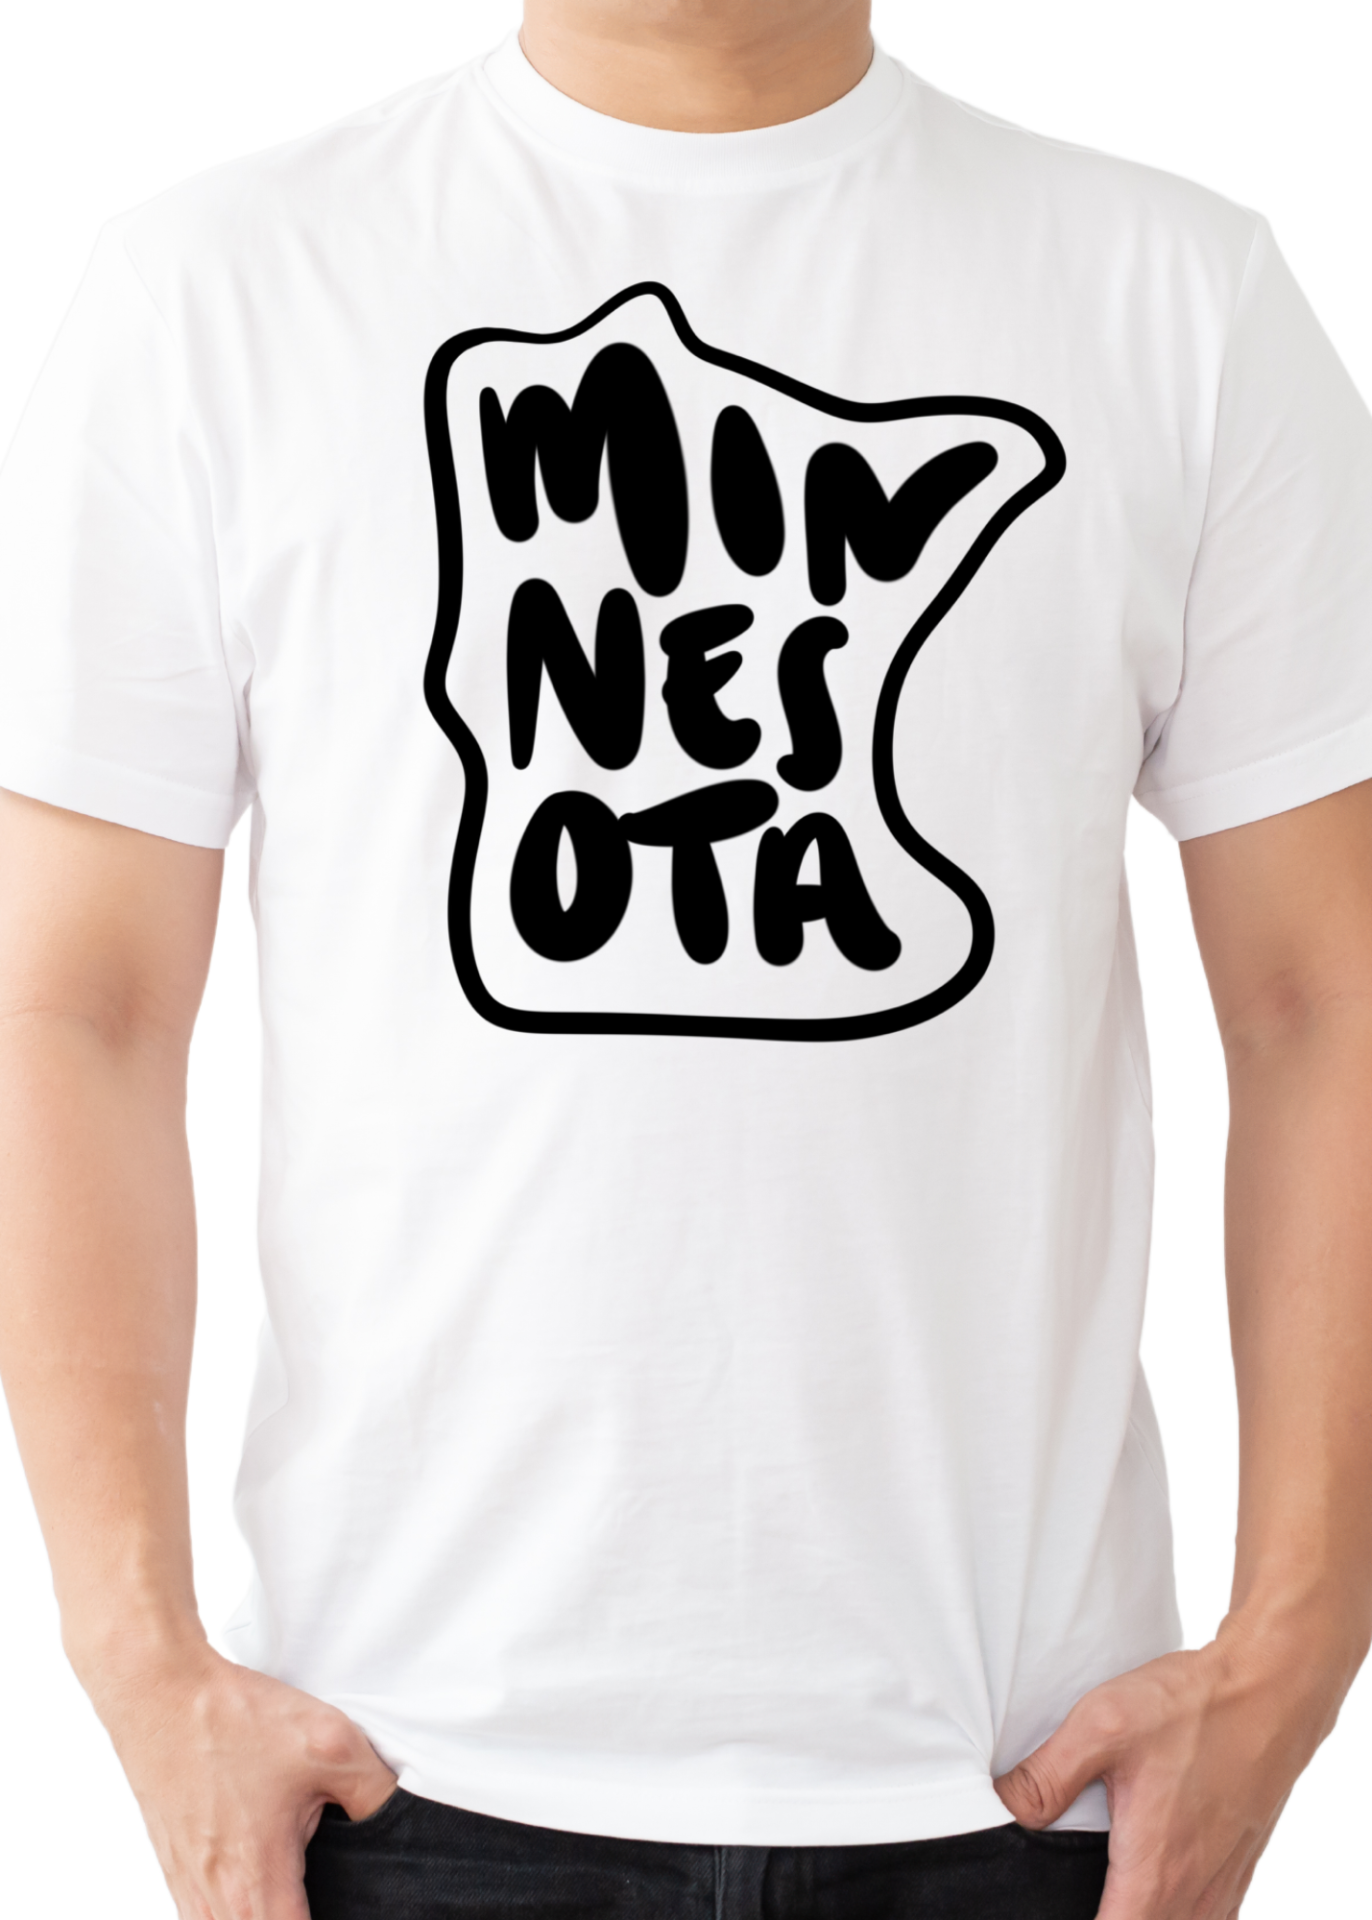 Black Minnesota text on a white t-shirt